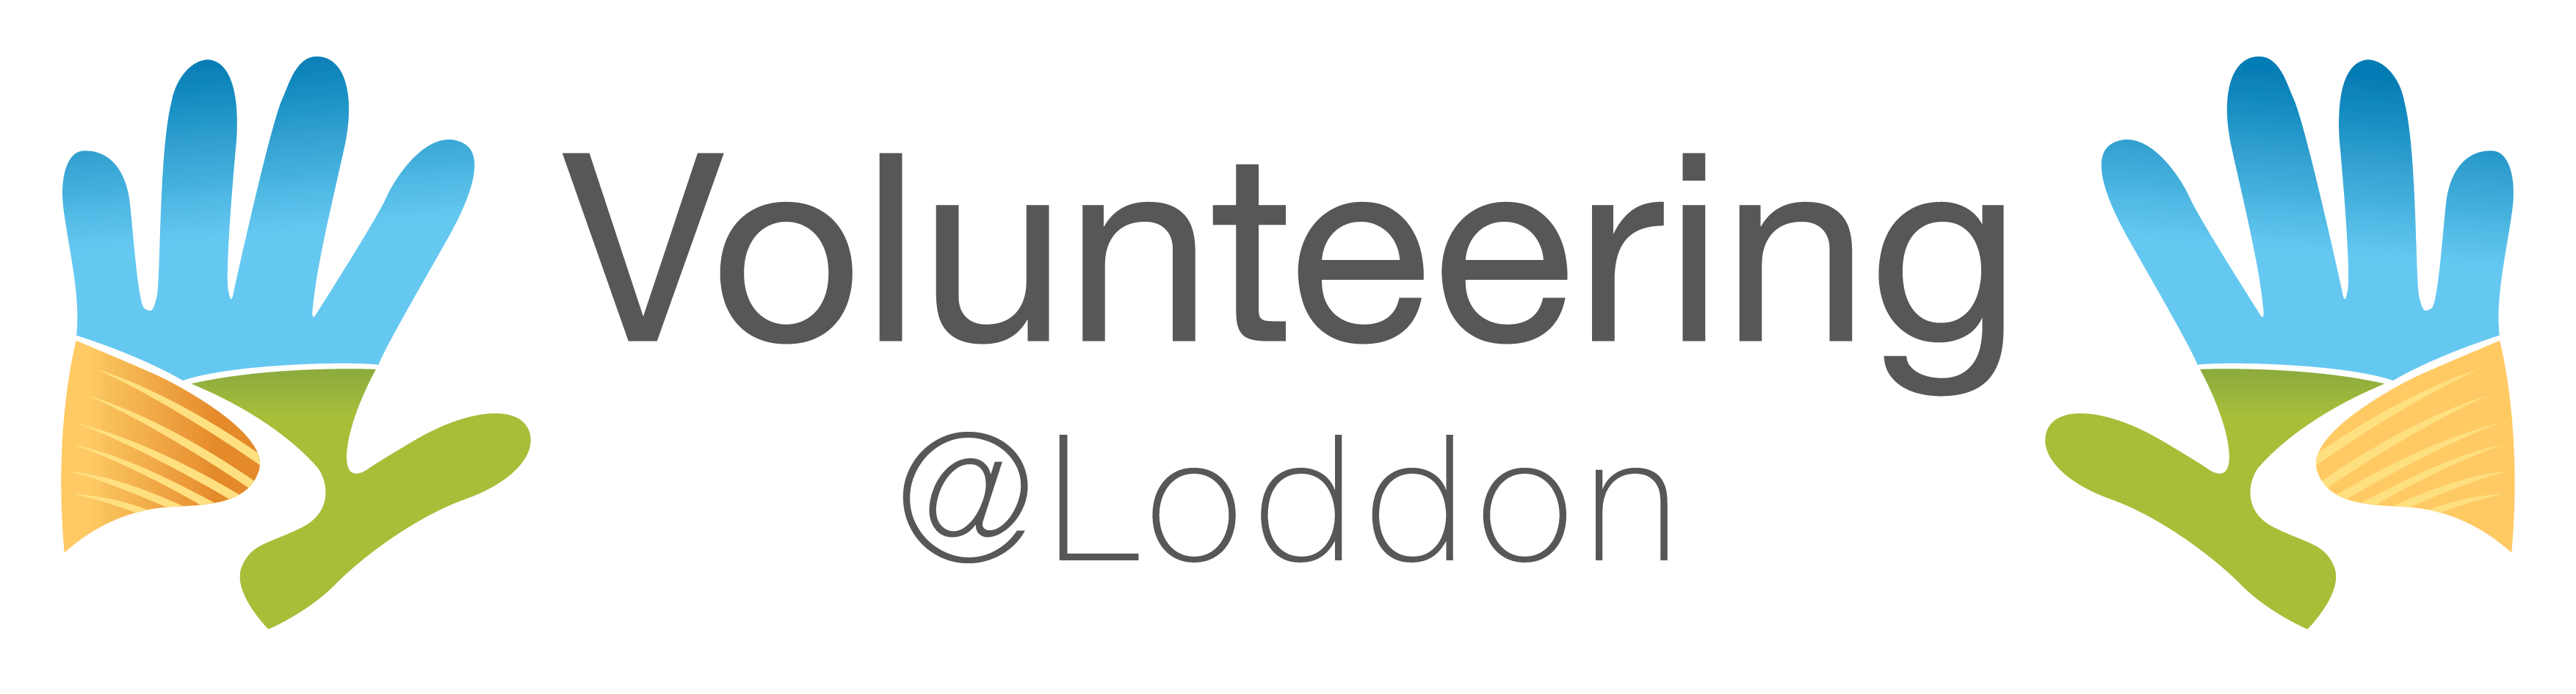 Volunteering-Loddon-Ella-Hocking.png